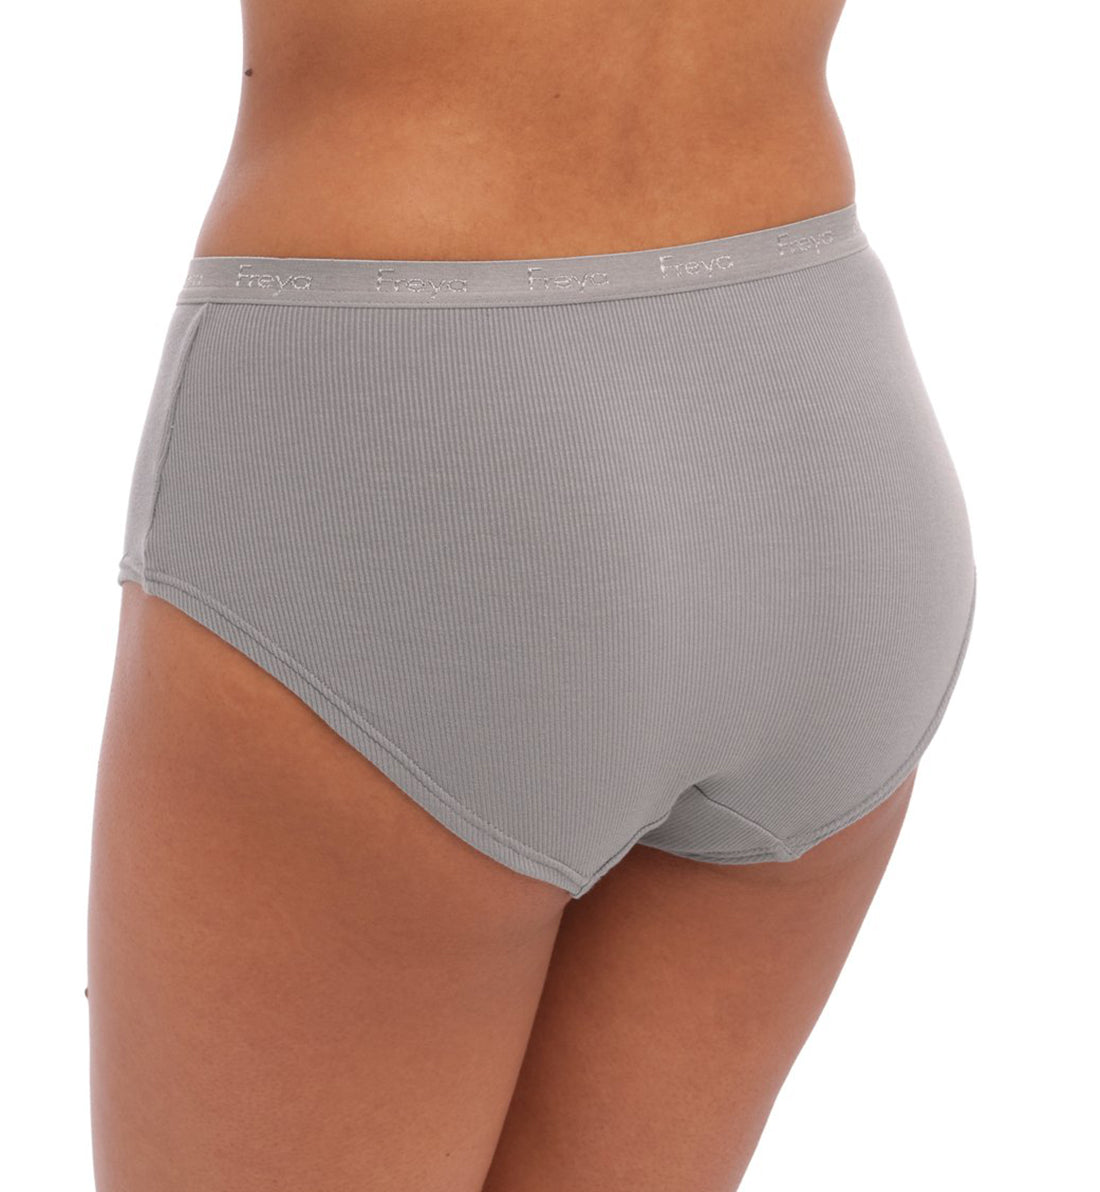 Freya Chill Short Panty (401380)- Cool Grey - Breakout Bras